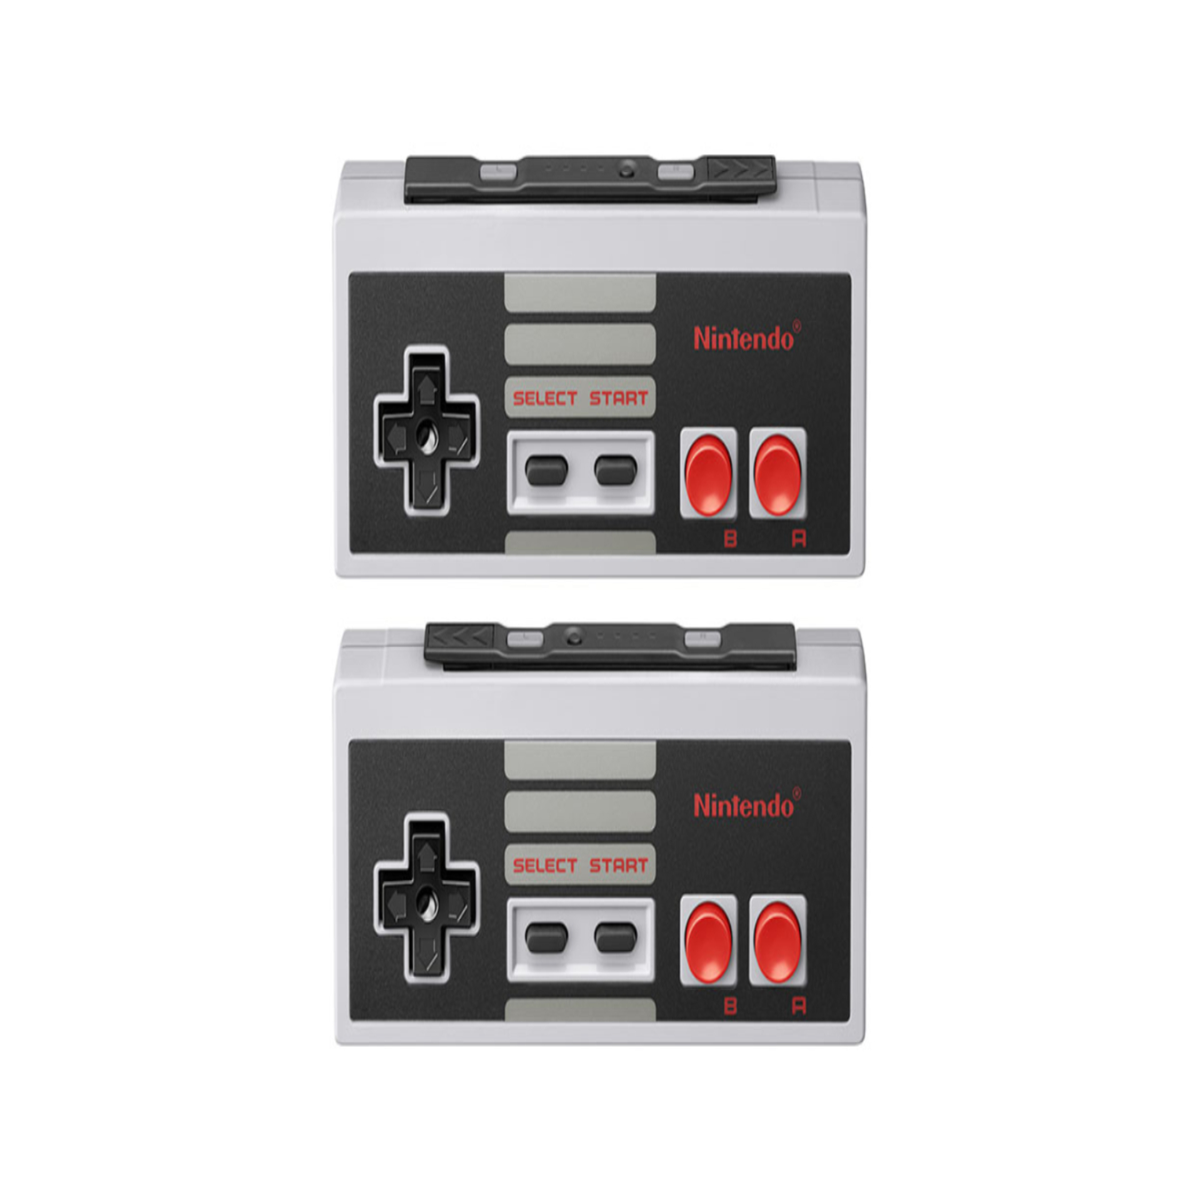 Nintendo control. Геймпад NES для Nintendo Switch. Геймпад Nintendo Switch NES Classic. Нинтендо джойстик Нинтендо. Джойстик нес для Нинтендо свитч.